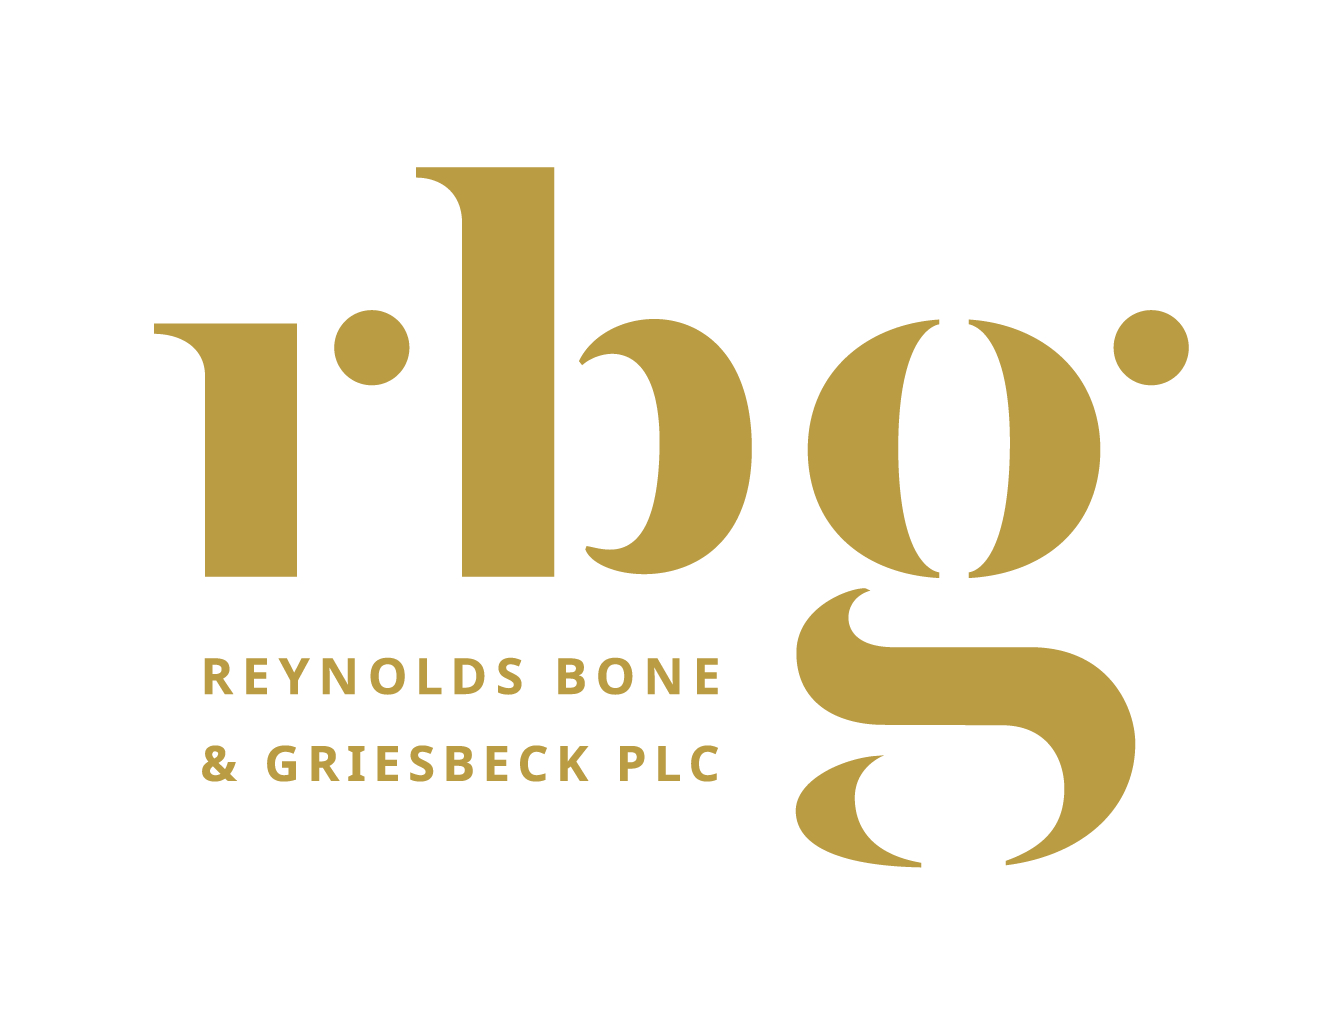 Reynolds Bone & Griesbeck